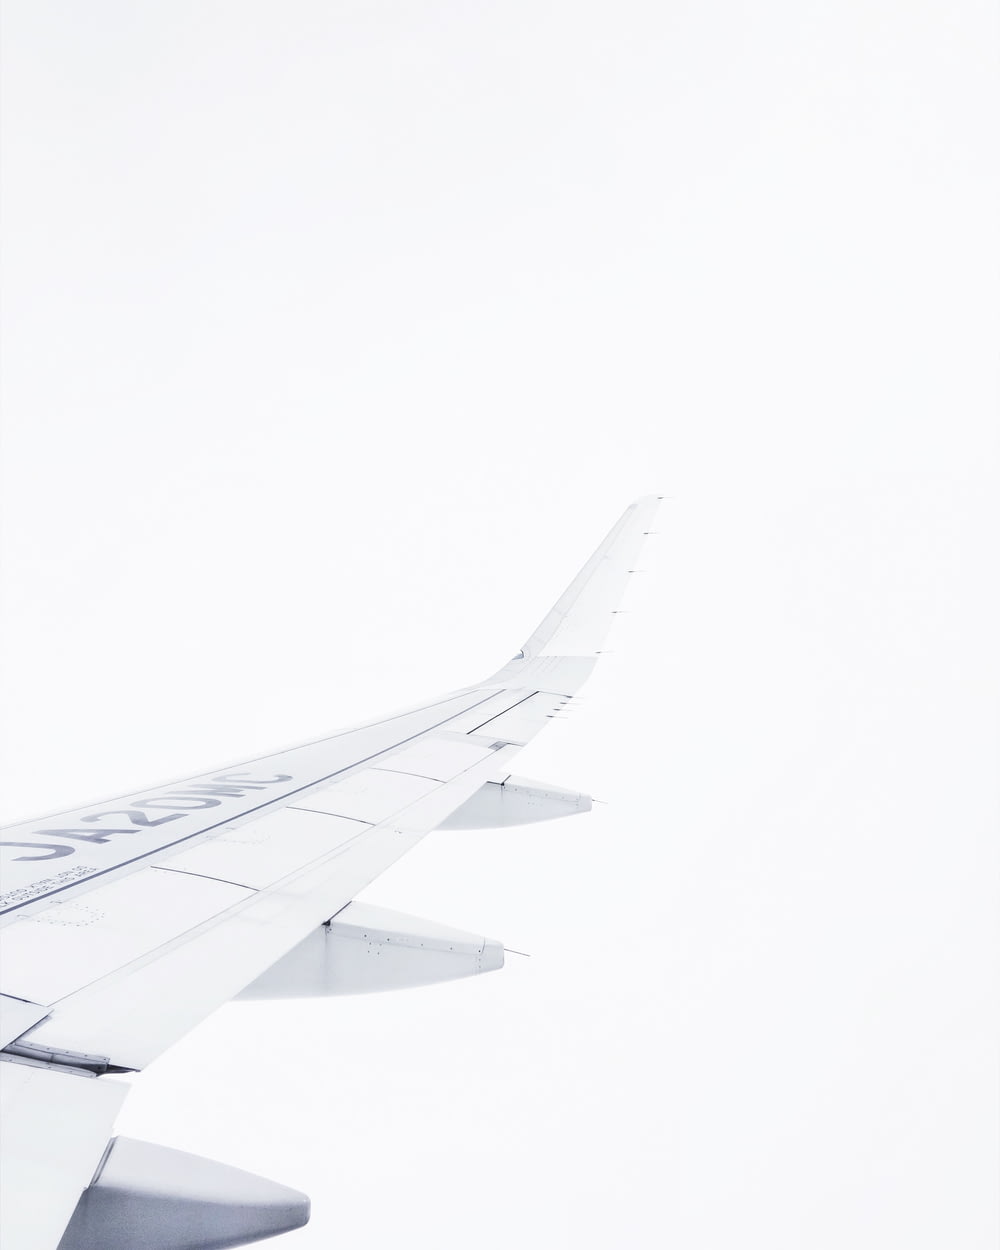 avion blanc dans l’air